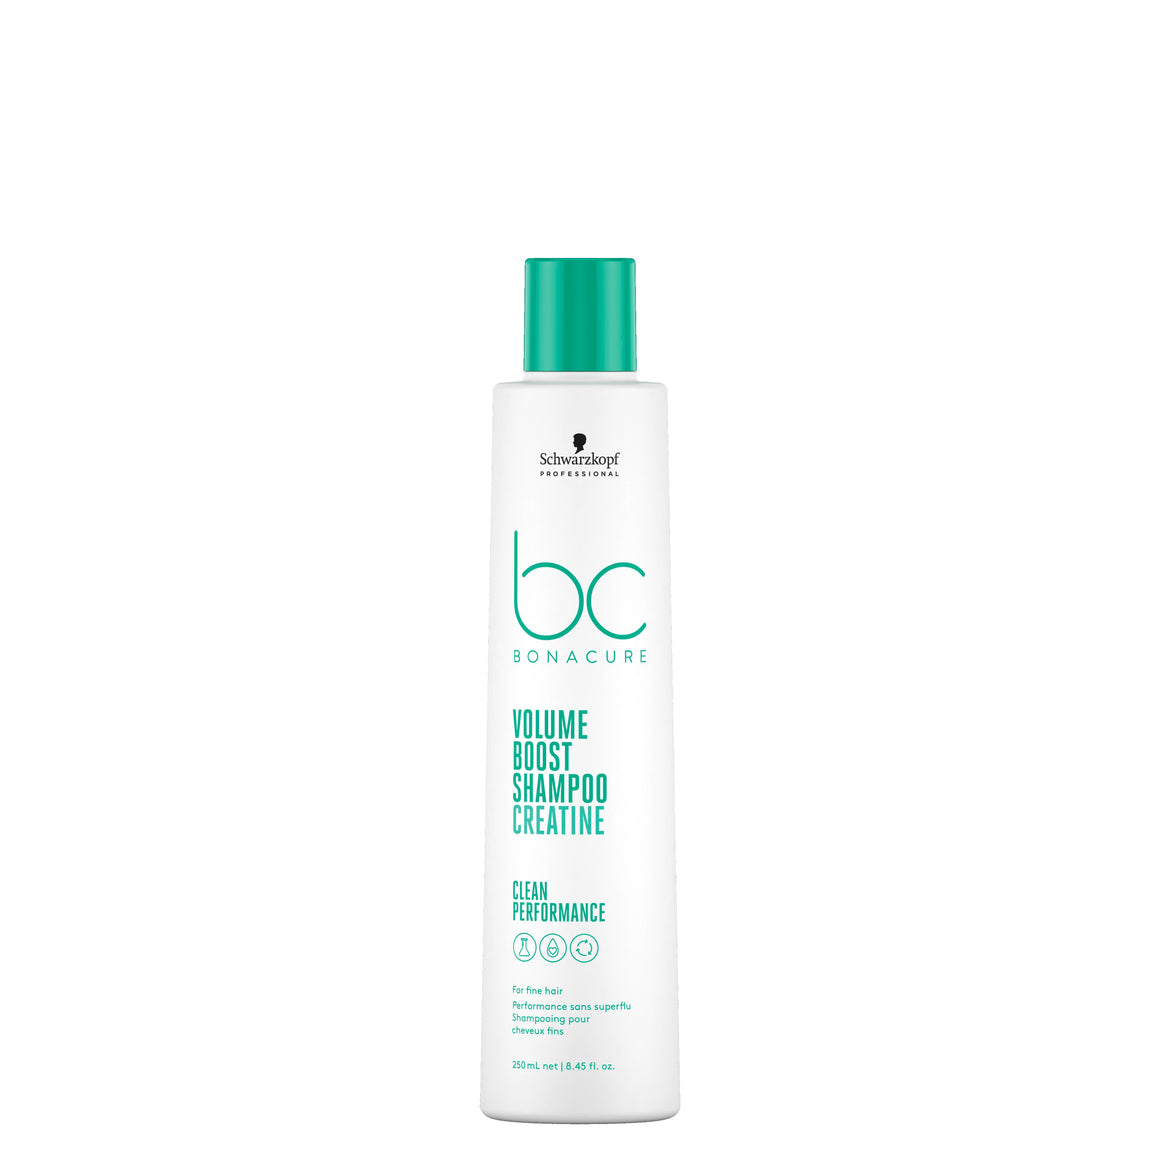 Schwarzkopf Professional BC Volume Boost Shampoo (Creatine) 250ml at Eds Hair Bramhall